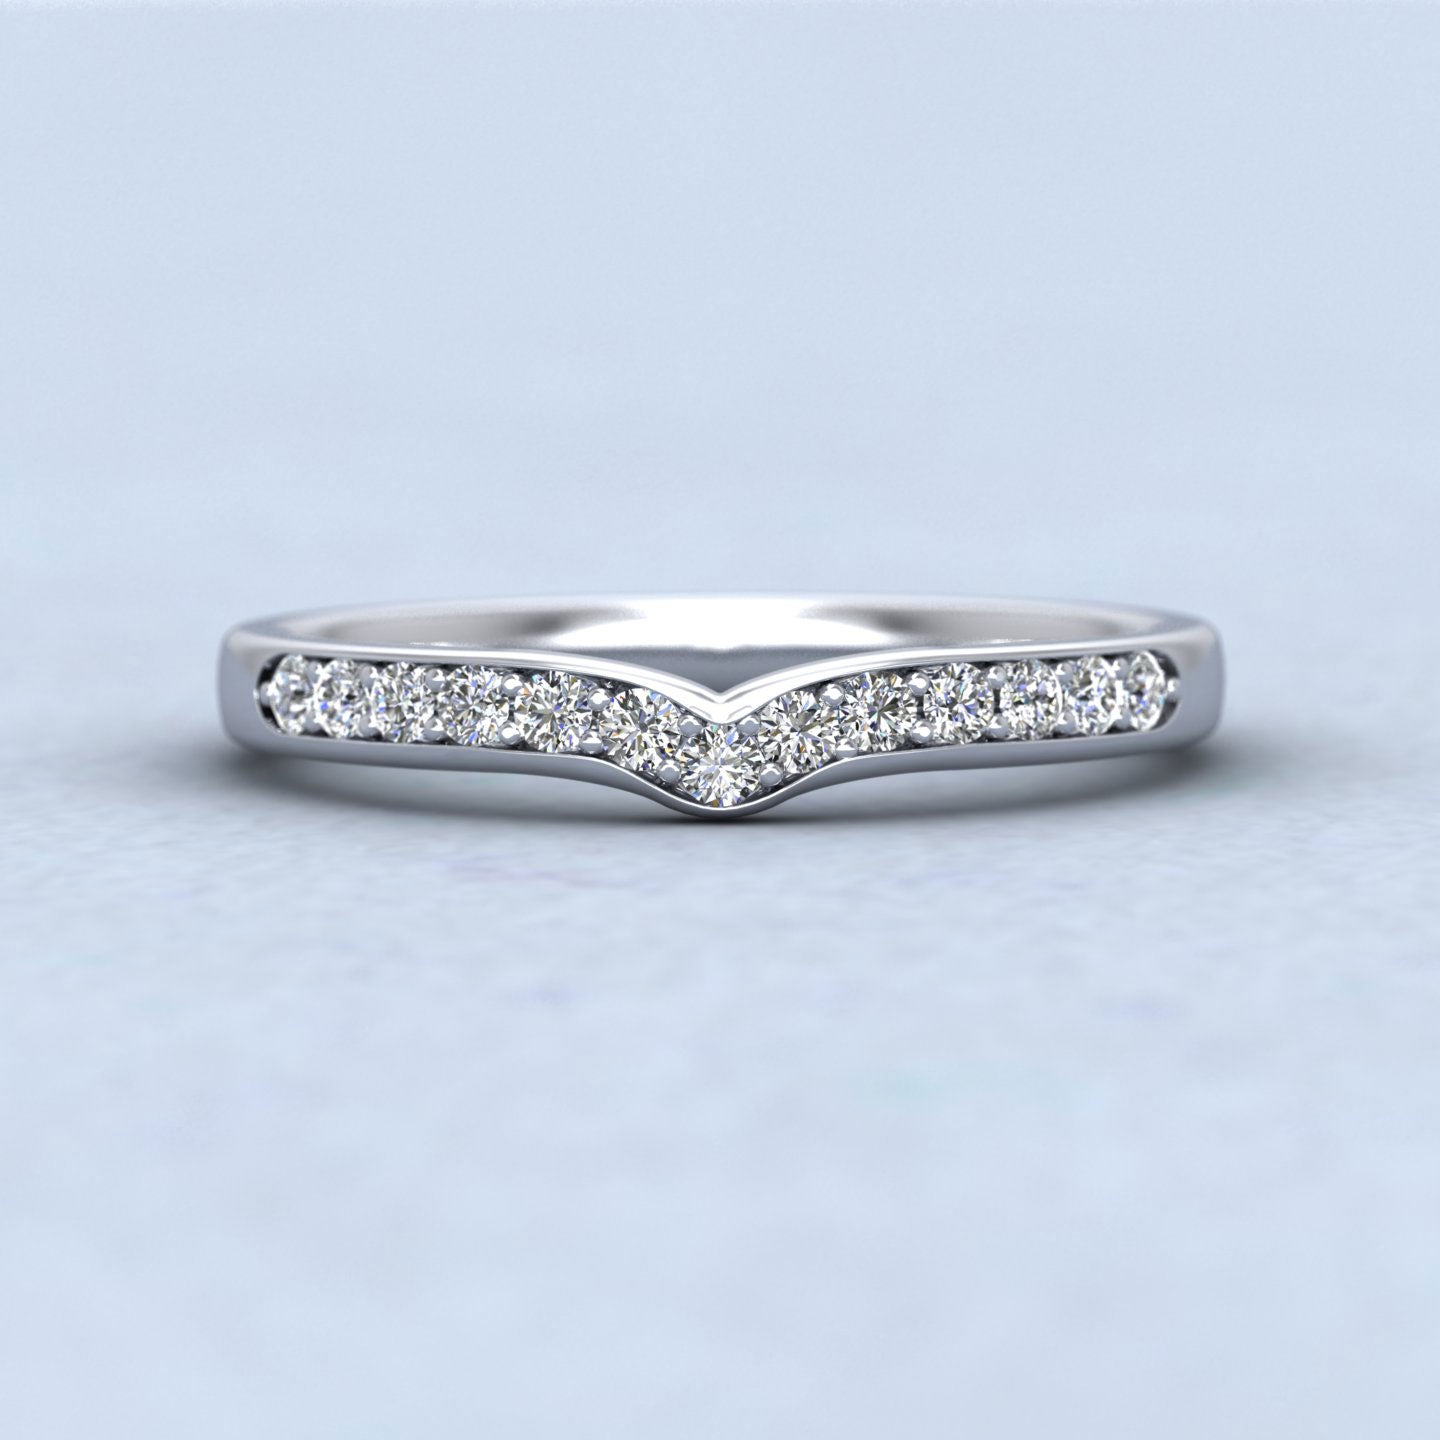 Slight Wishbone Shaped Bead Set Diamond Wedding Ring In 9ct White Gold 2.25mm Wide